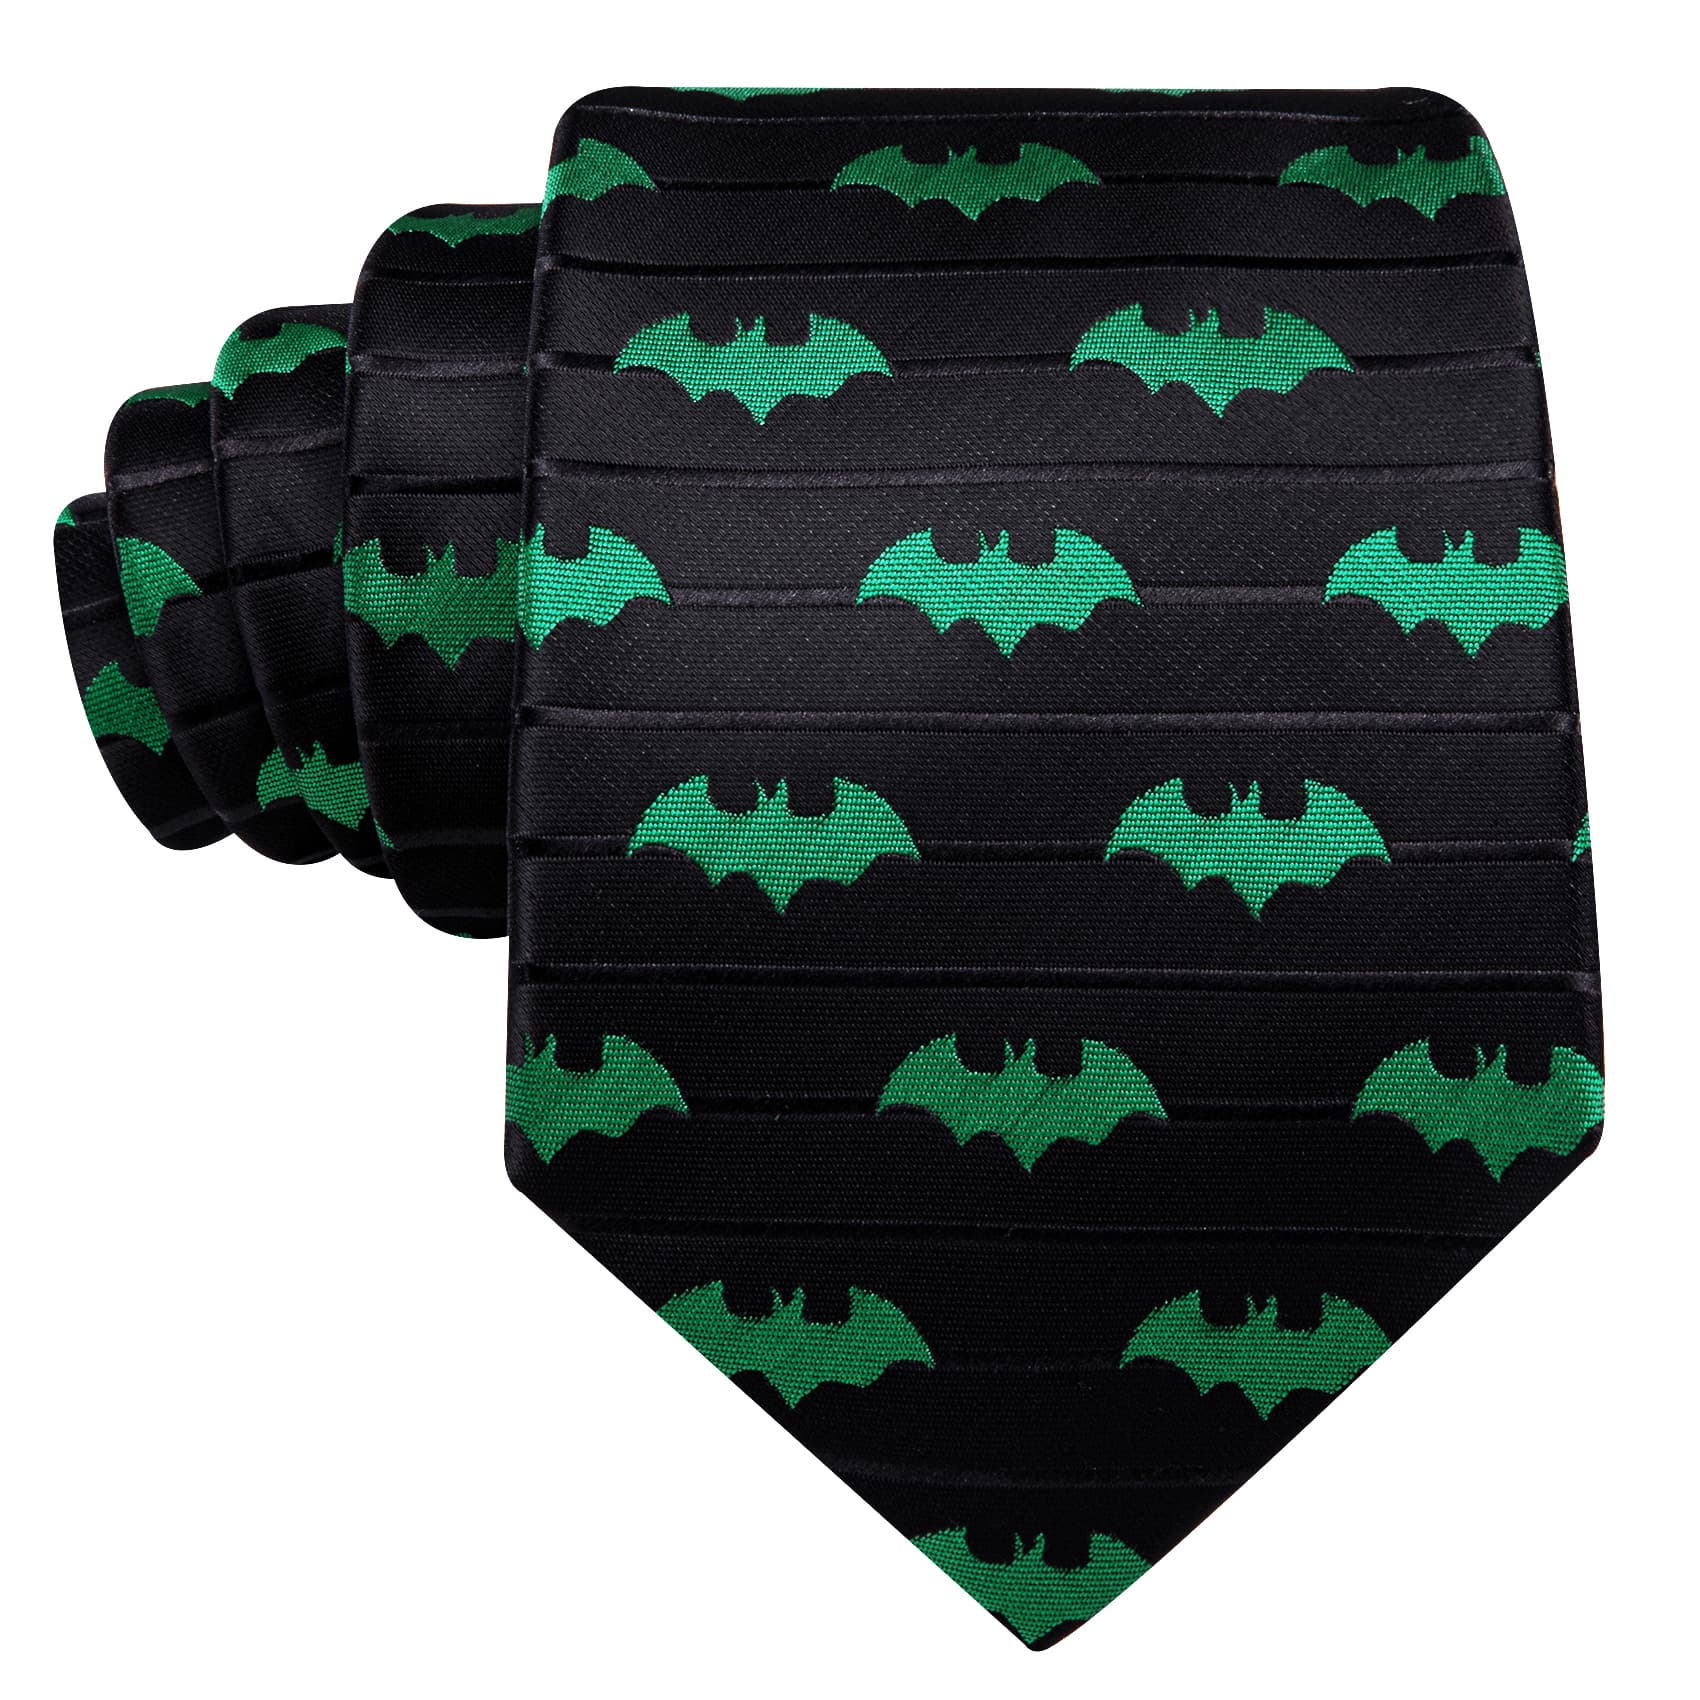 Tie Jacquard Green Bat Black Novelty Necktie Hanky Cufflinks Set